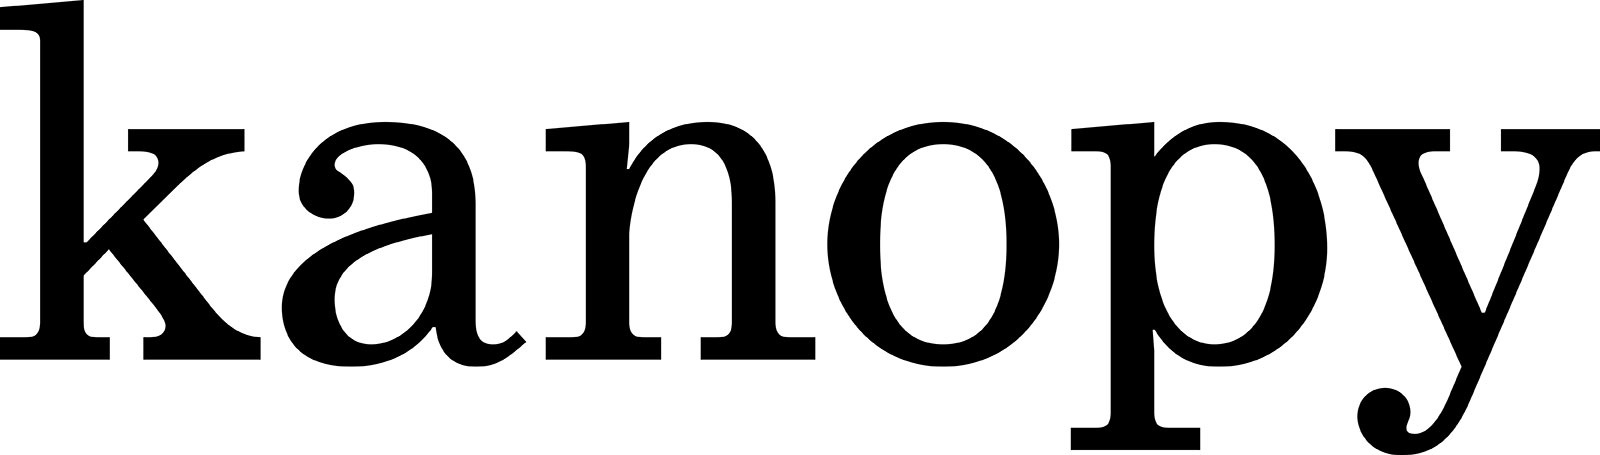 kanopy logo